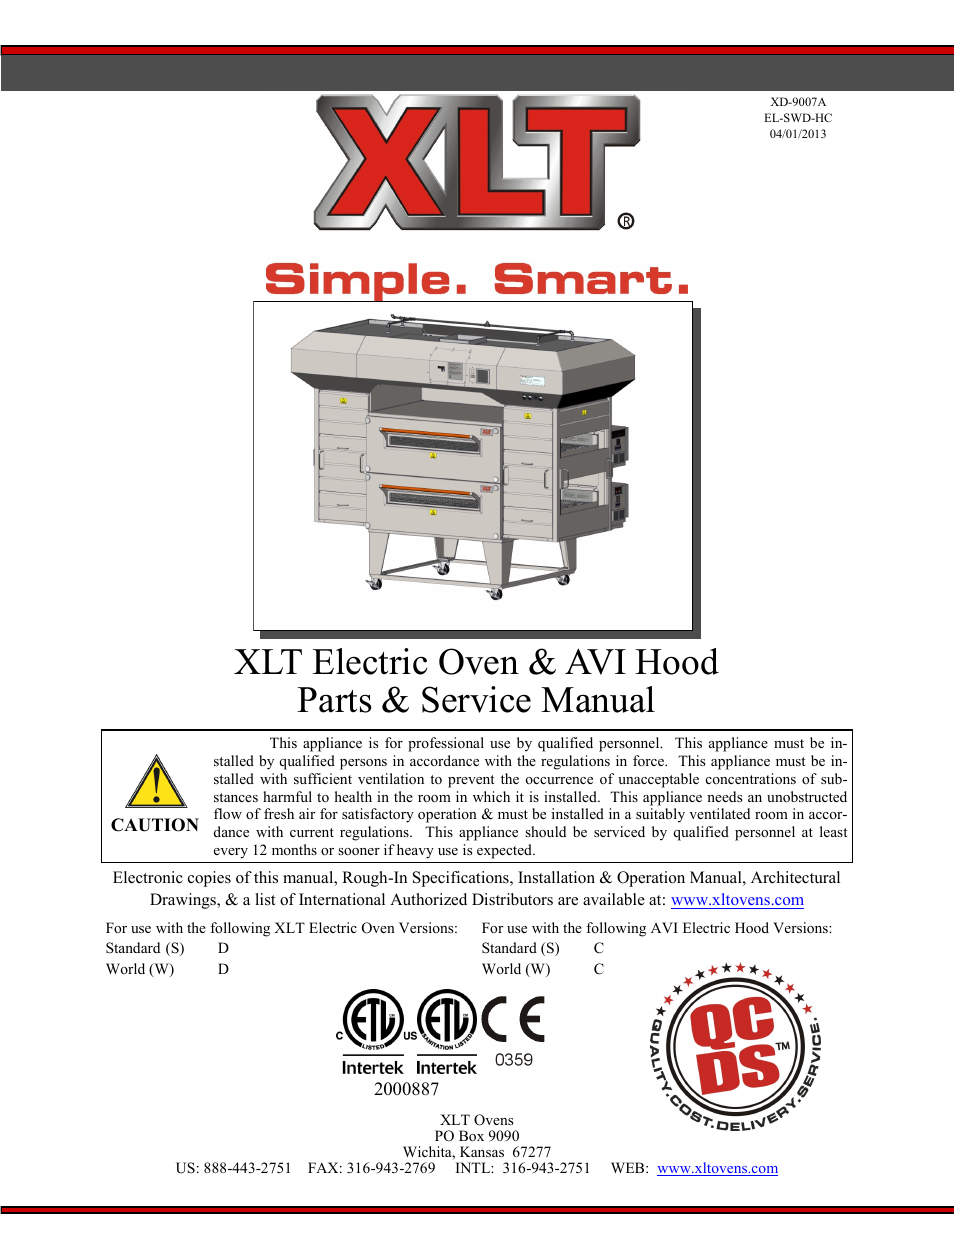 XLT XD-9007A (ELEC Oven Version – D, AVI Hood Version – C) User Manual | 64 pages